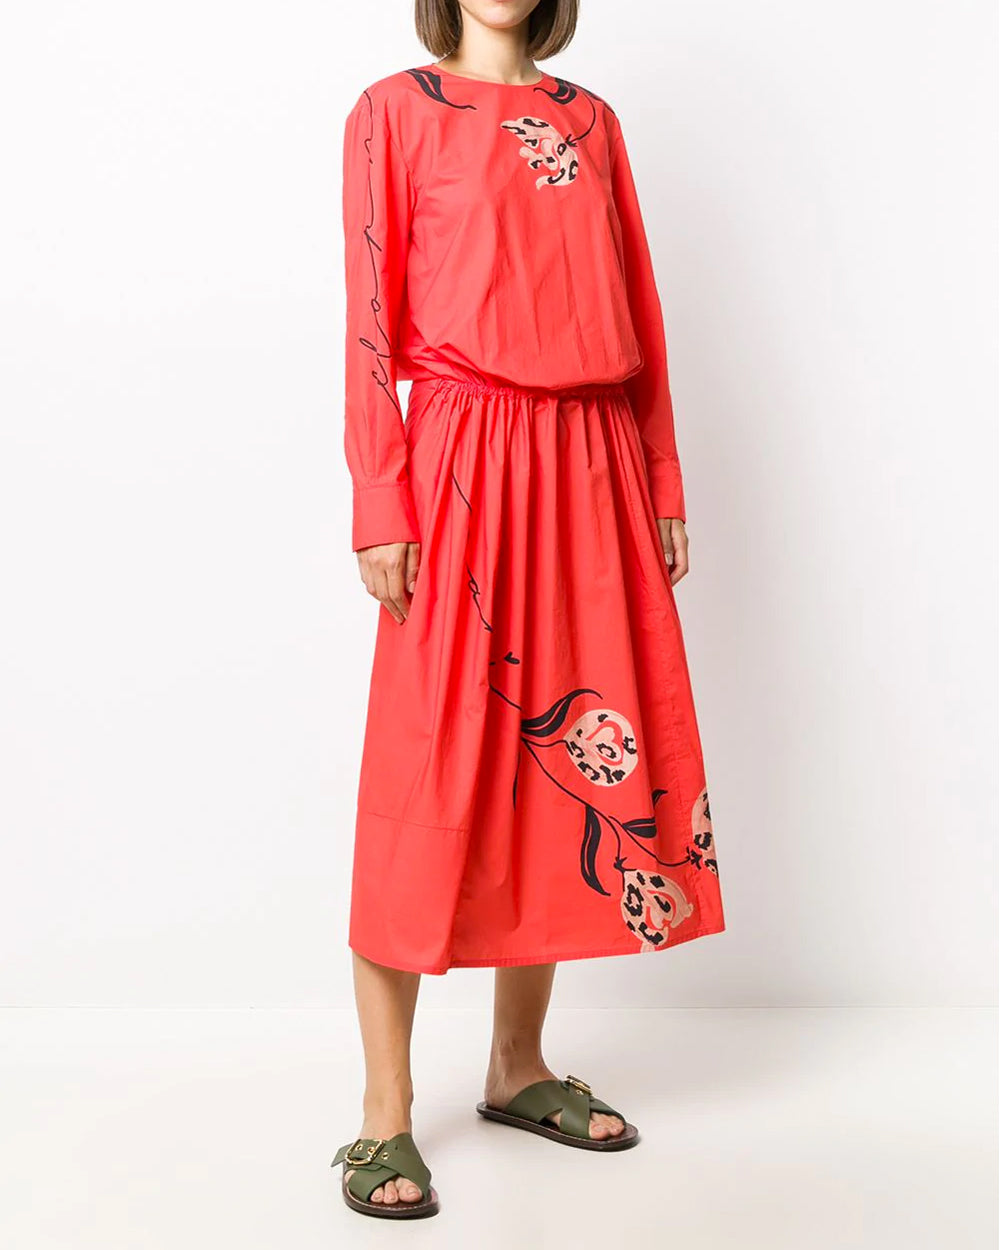 Red Floral Print Cotton Dress